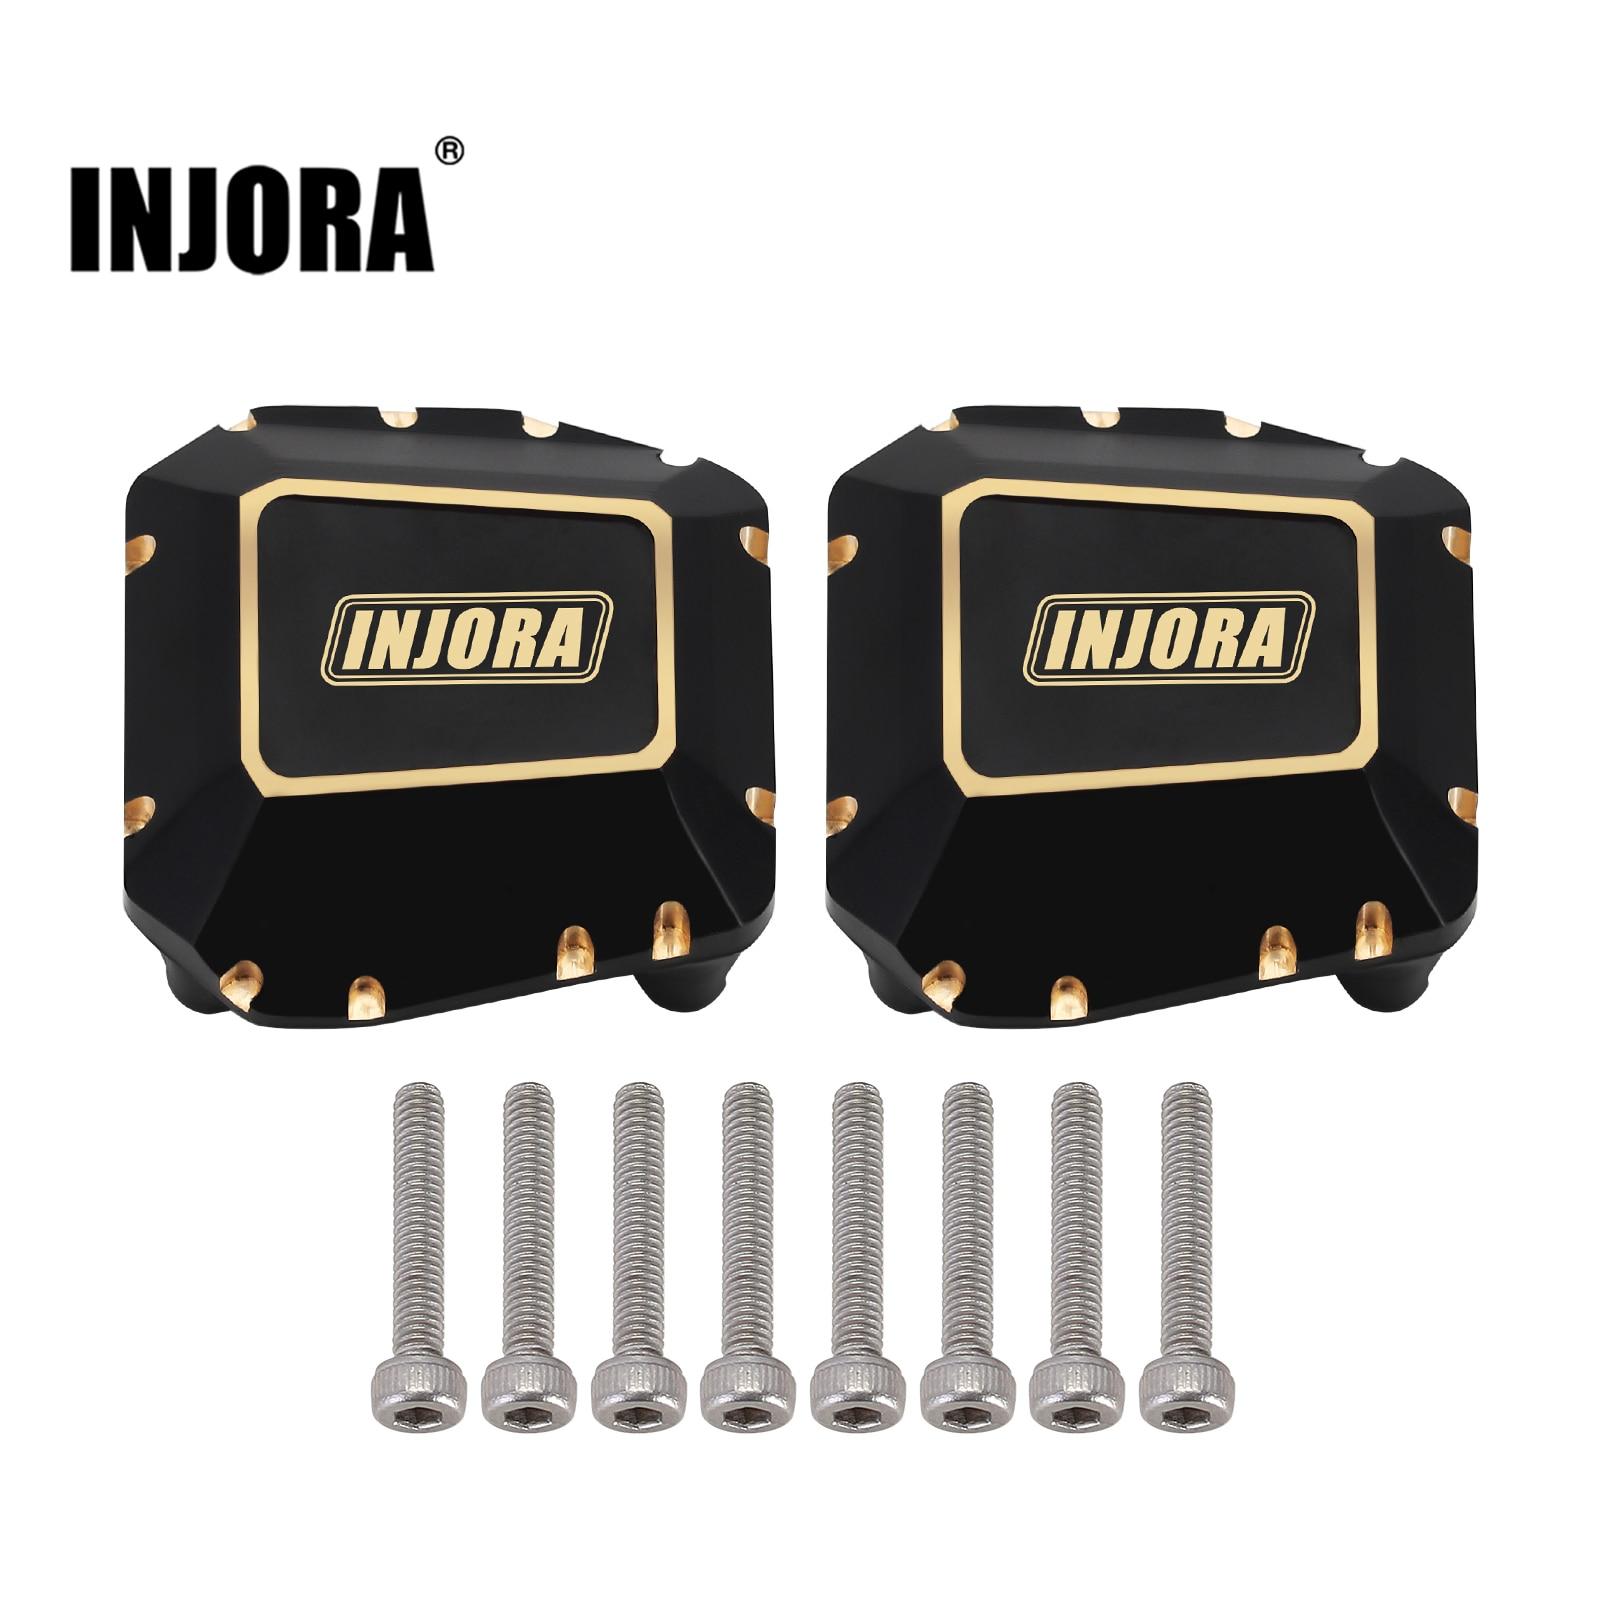 INJORA-38g-Black-Coating-Brass-Axle-Cover-for-1-10-RC-Crawler-SCX10-PRO-SCX10-III.jpg